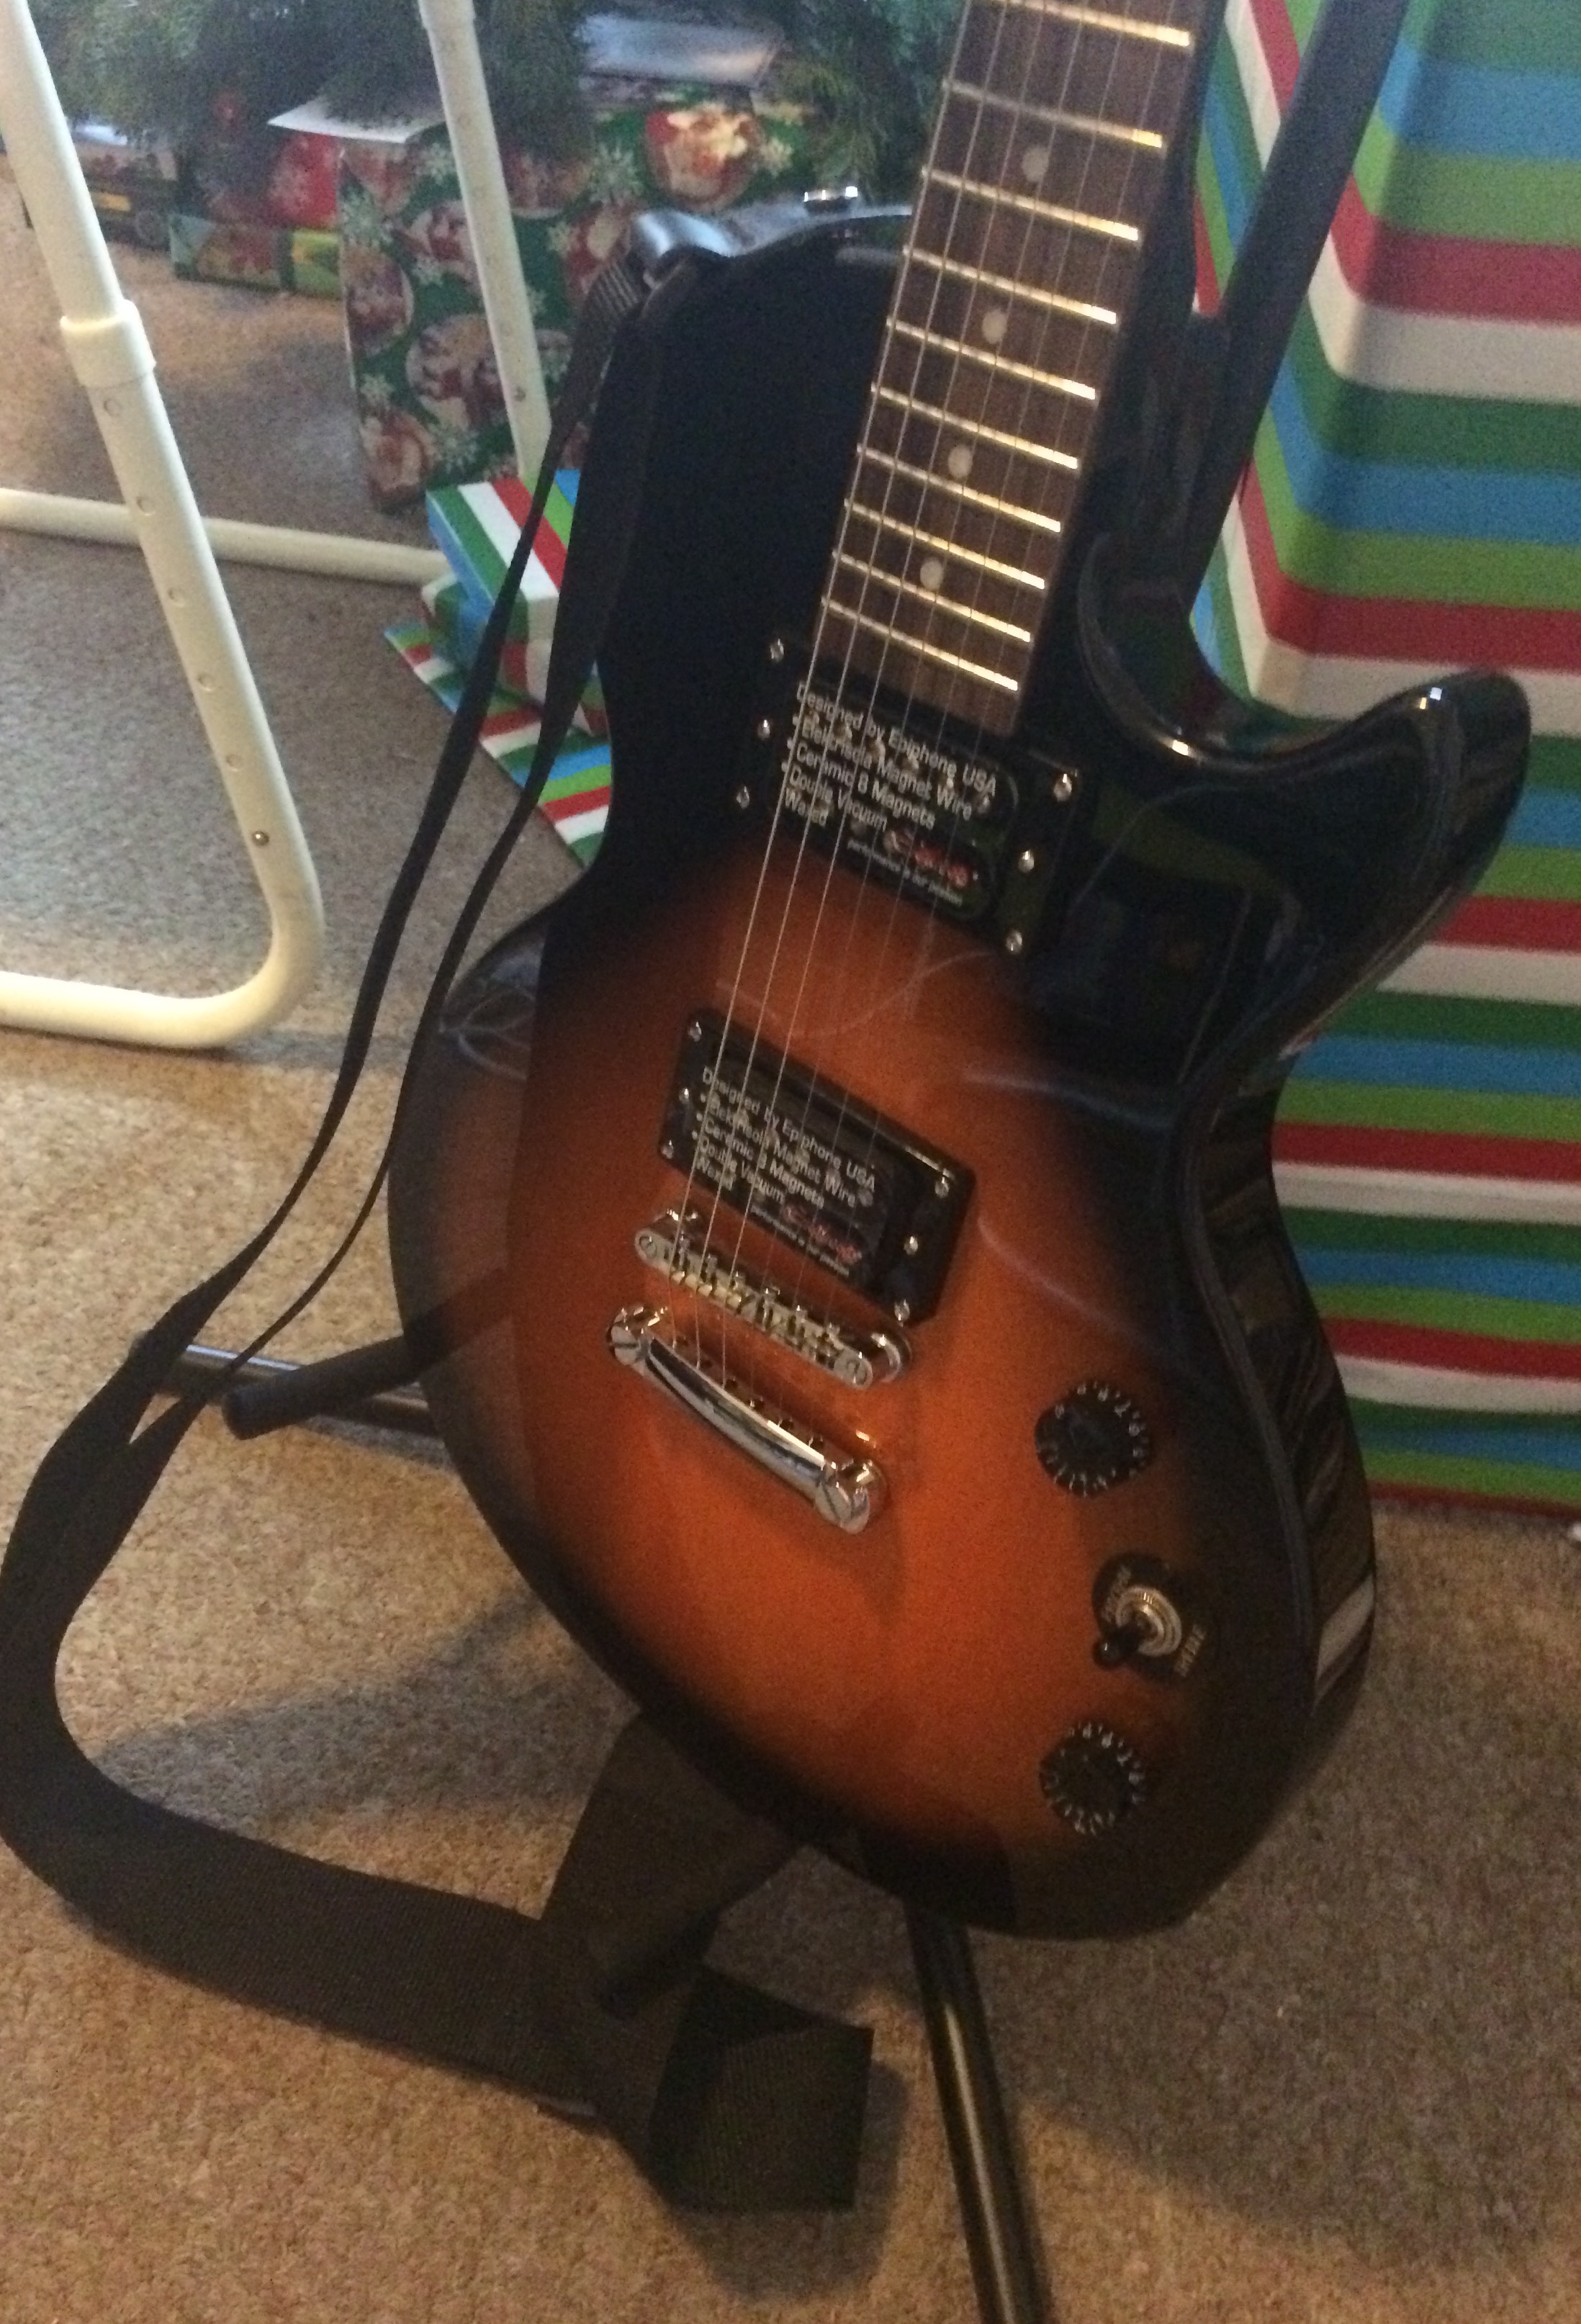 Dana's Guitar